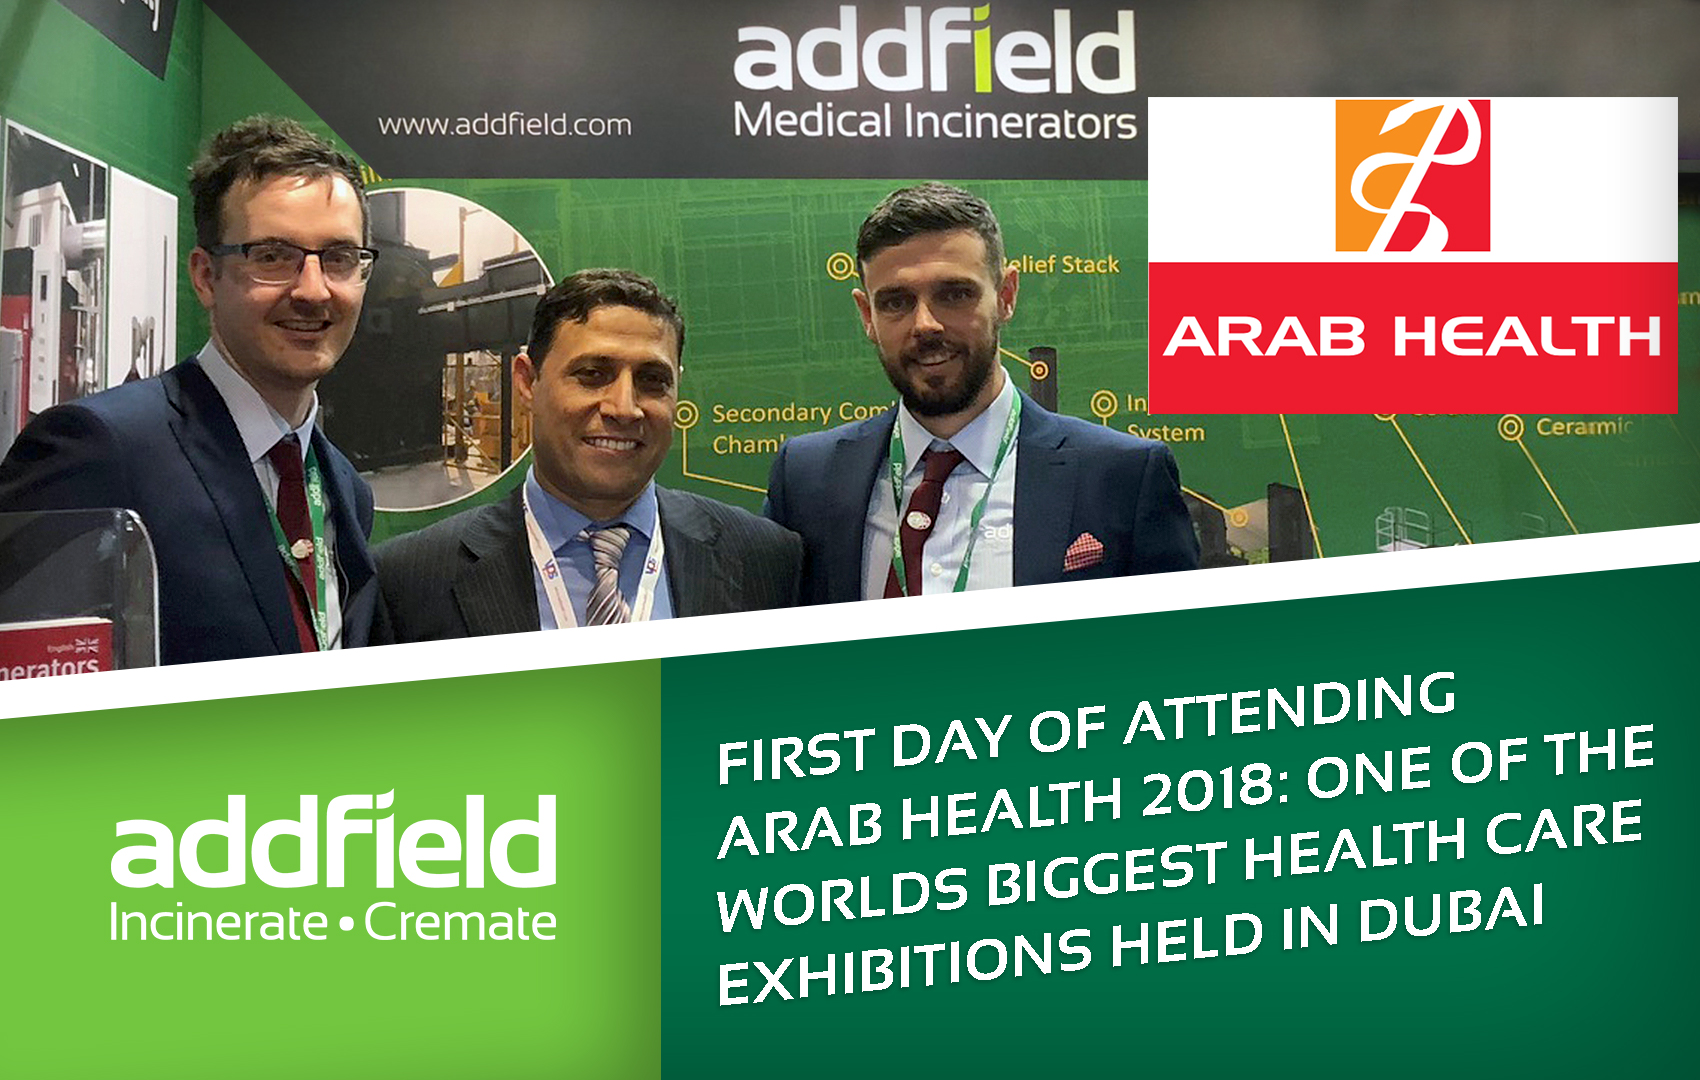 sales team attend Arab health show